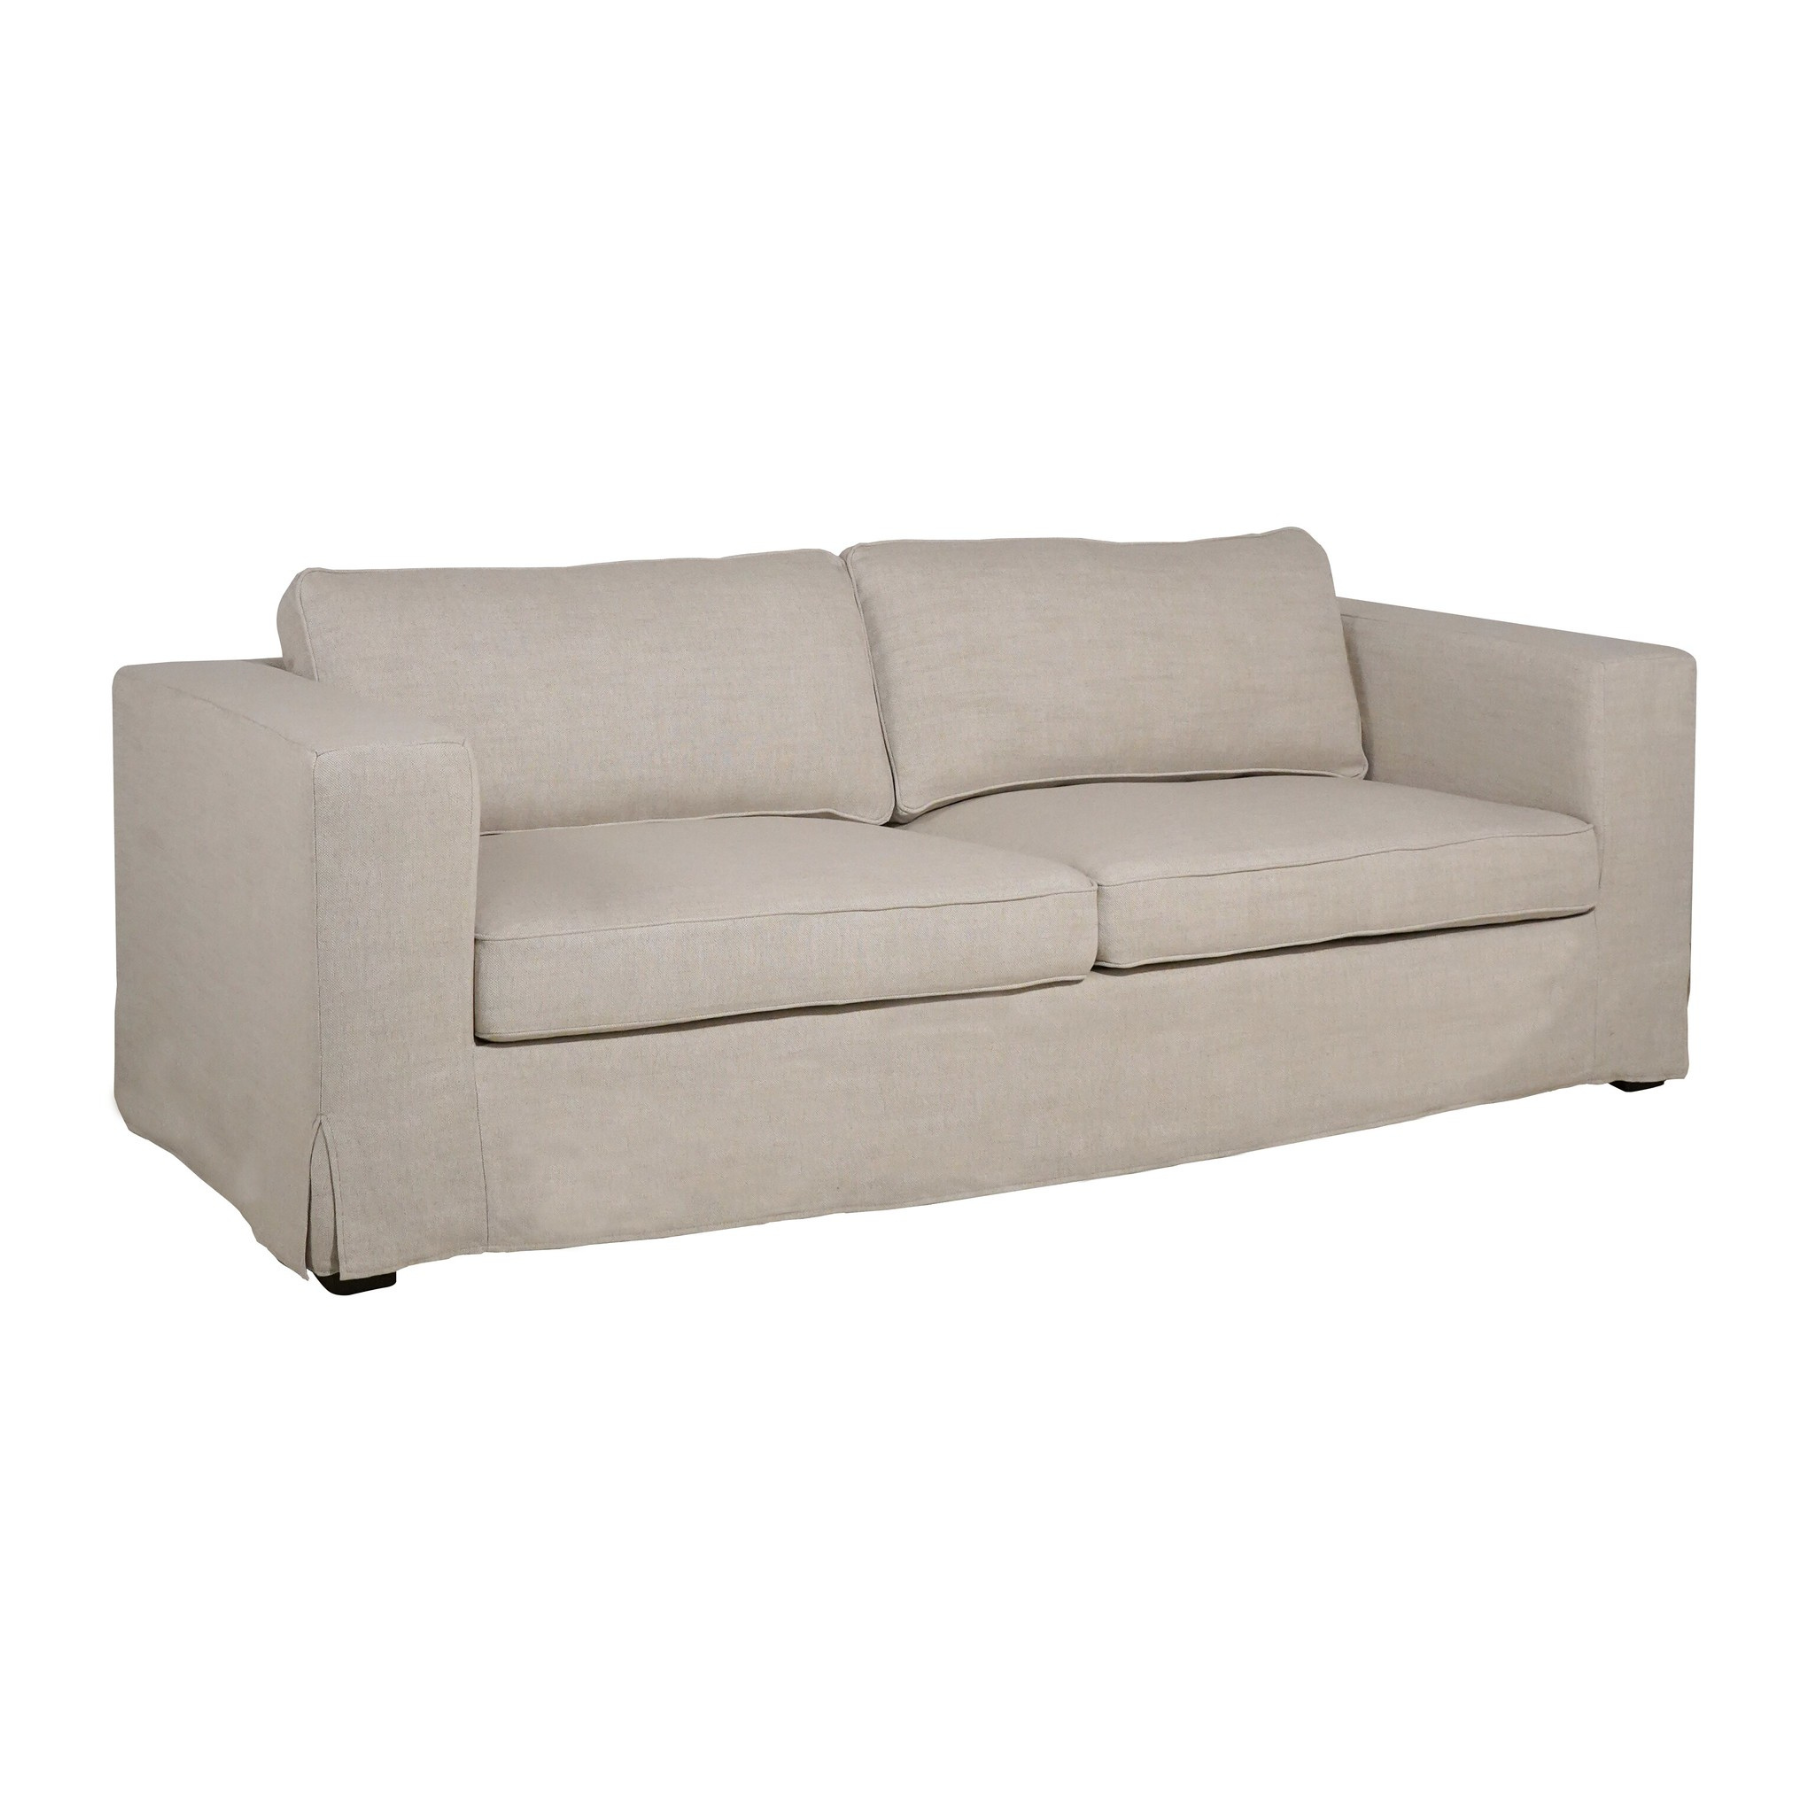 Denver Natural Linen Slipcover Sofa – Hauser Company Stores